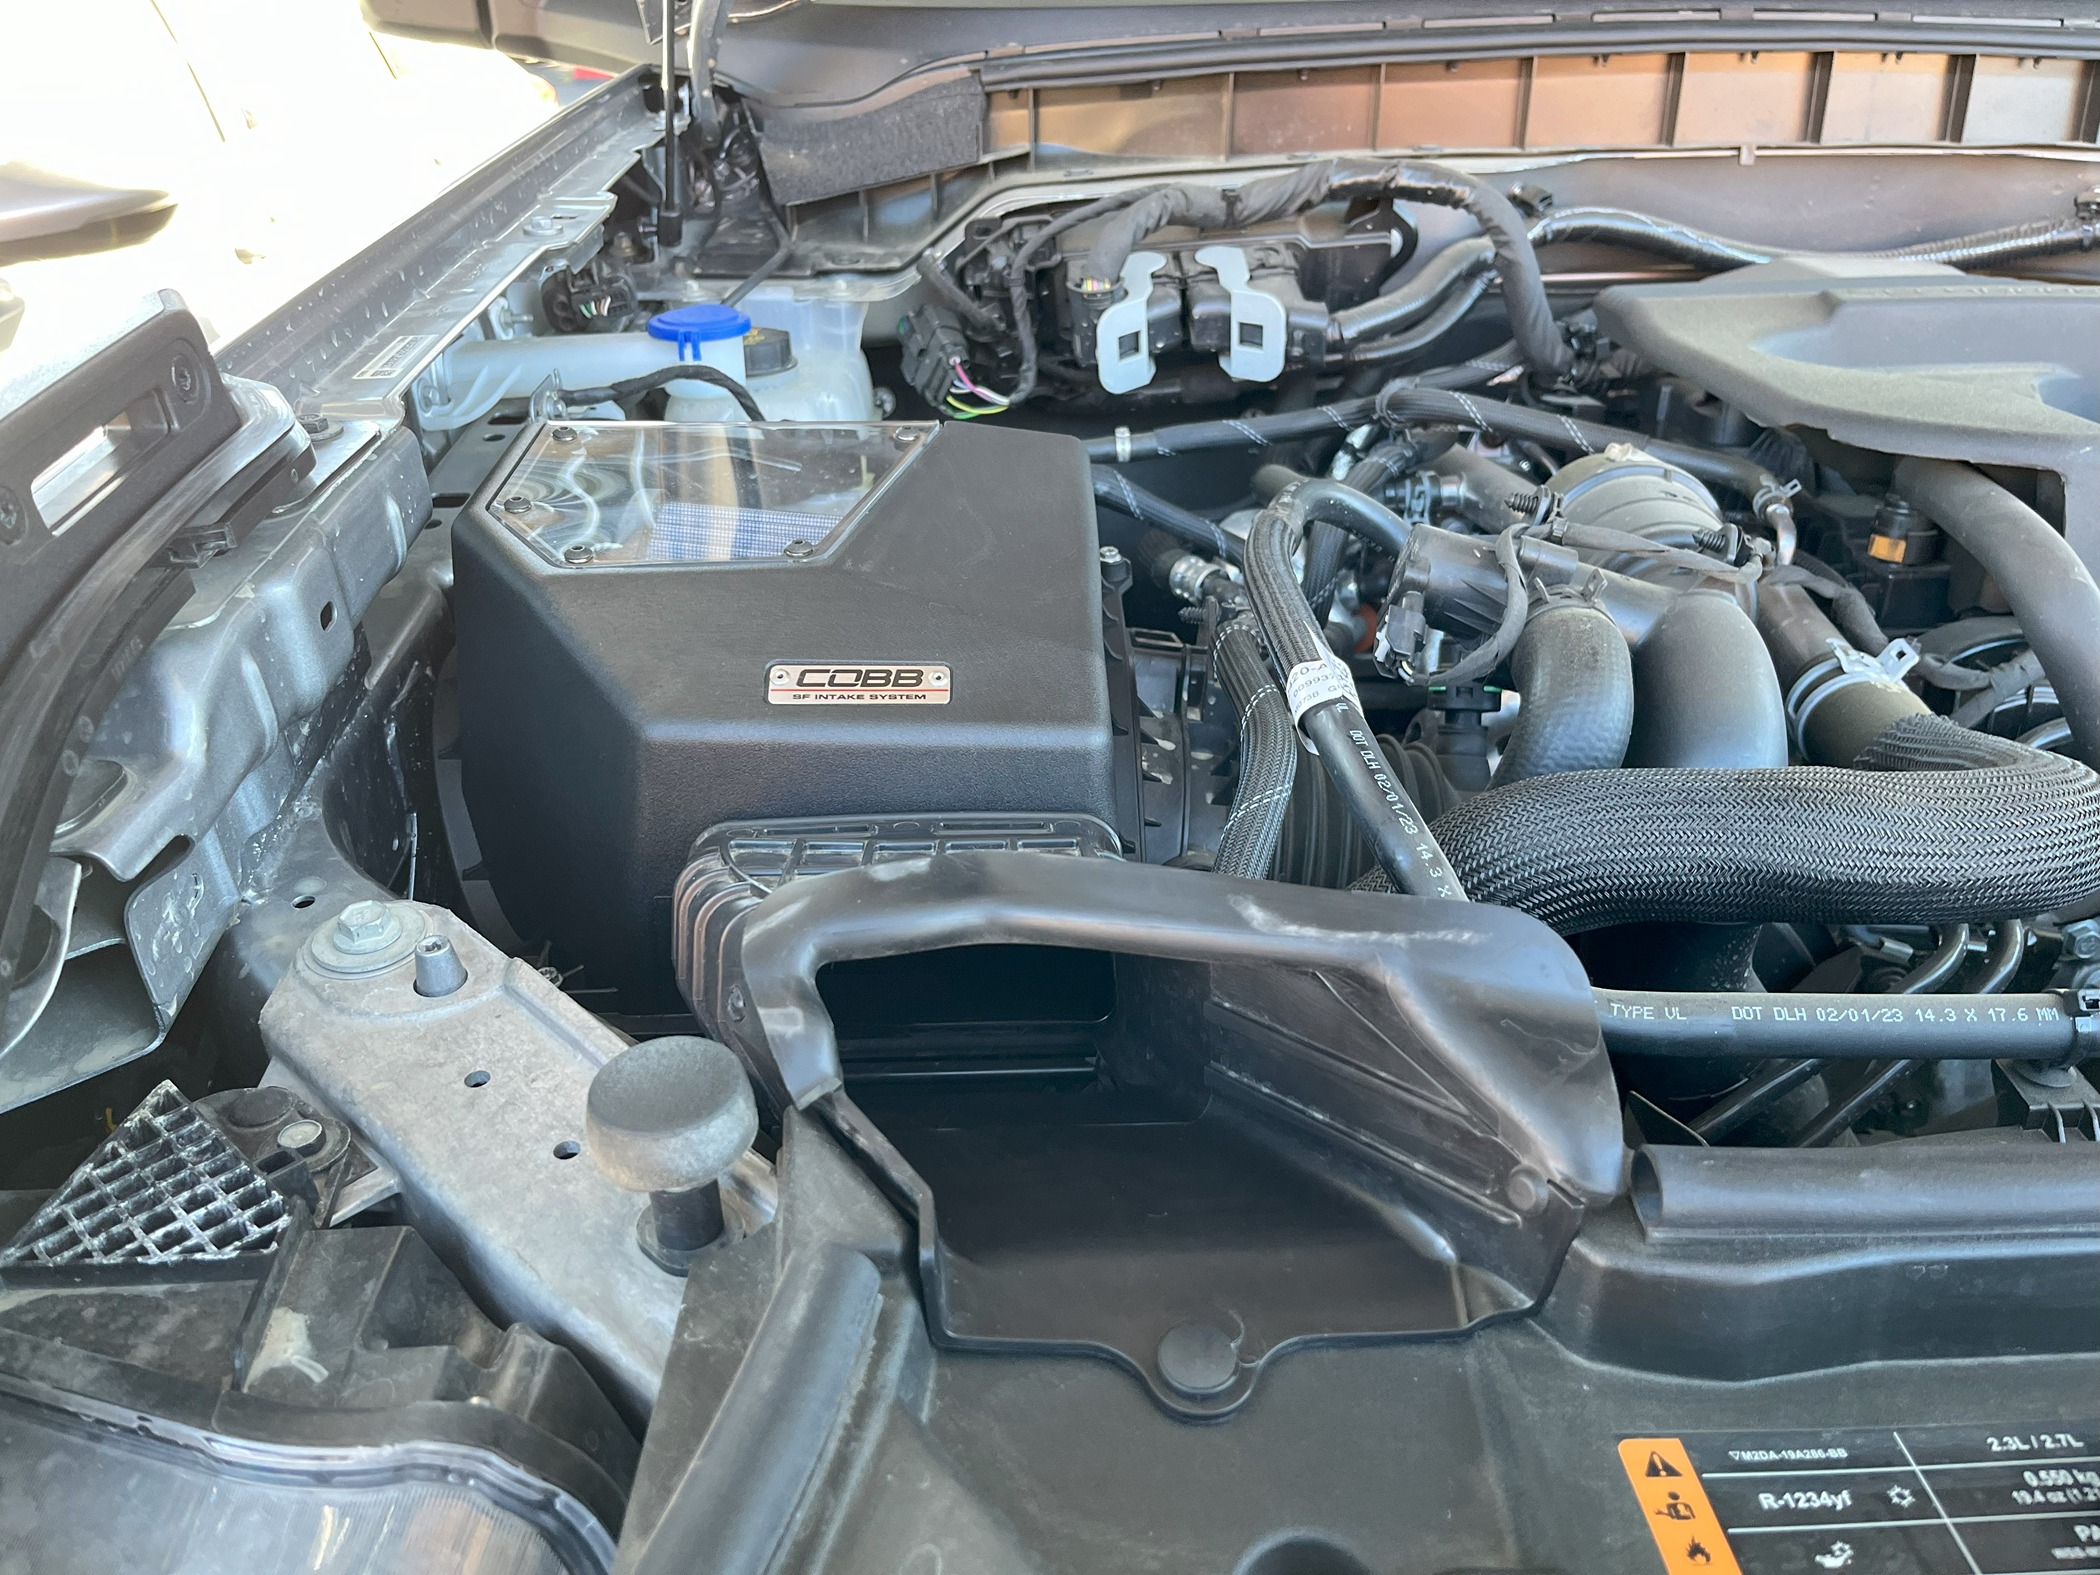 Ford Bronco COBB Intake system airbox IMG_0679